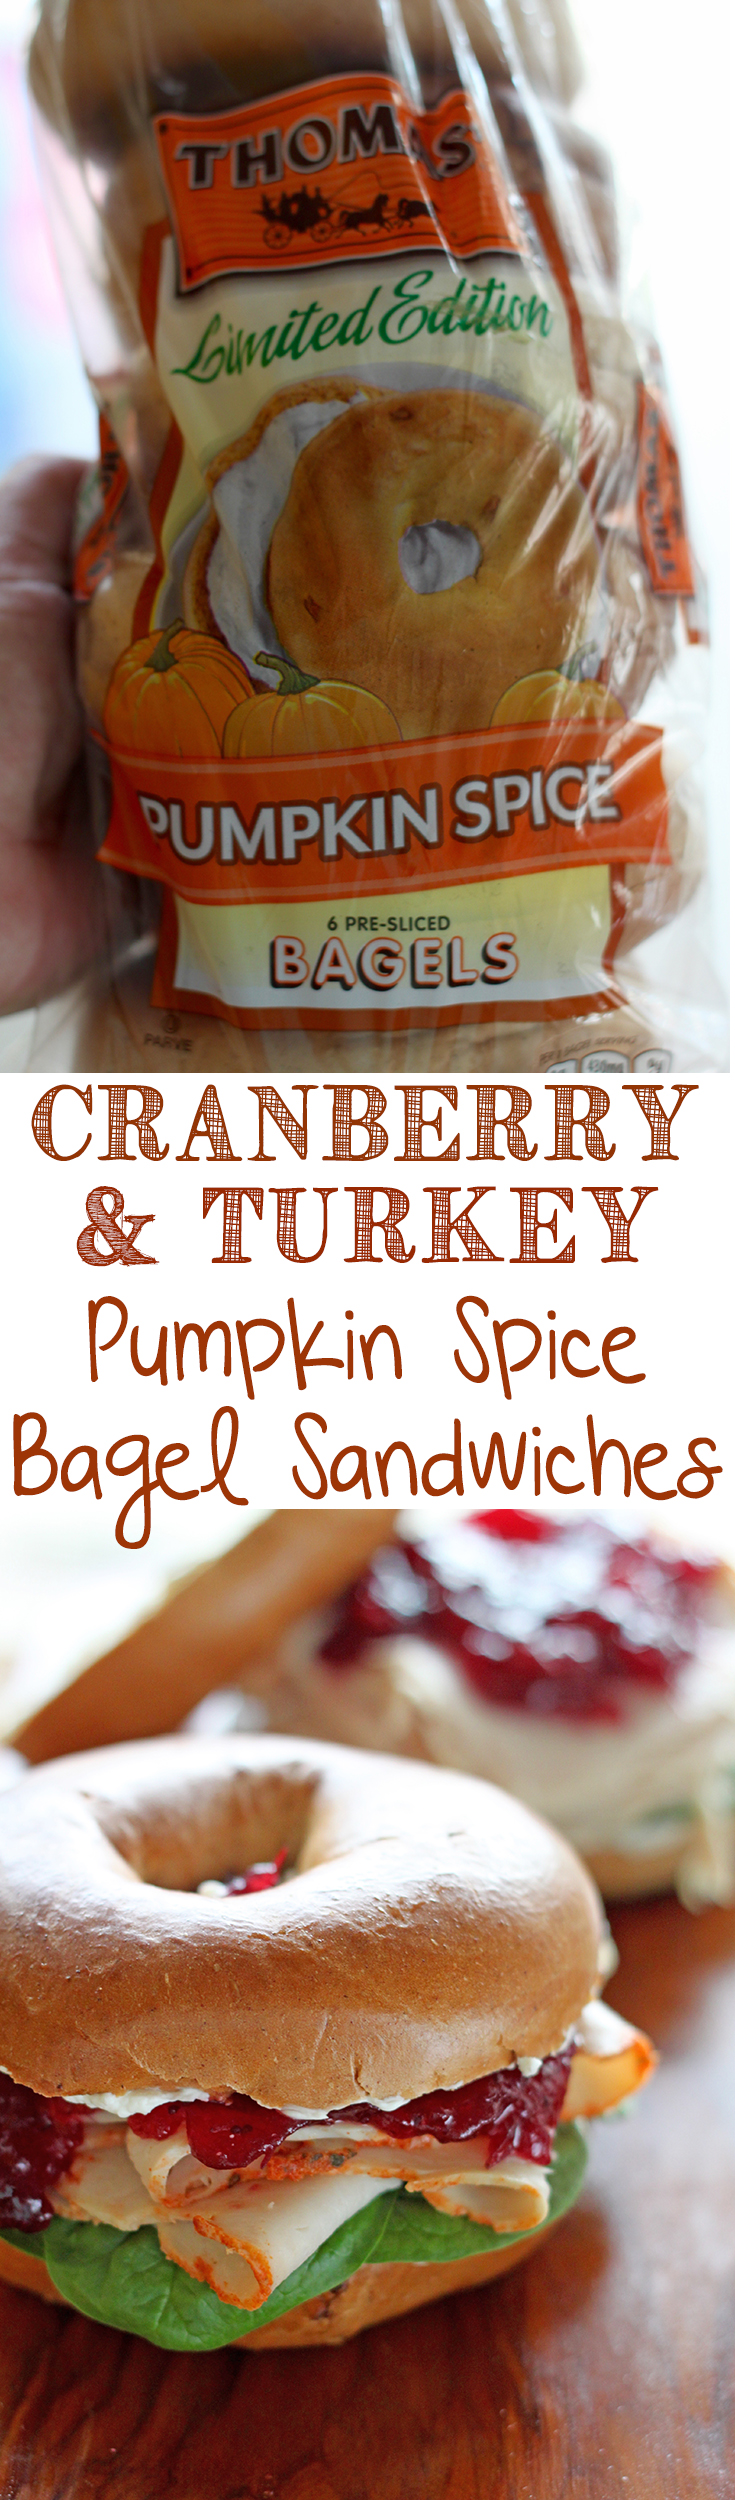 Cranberry and Turkey Pumpkin Spice Bagel Sandwiches